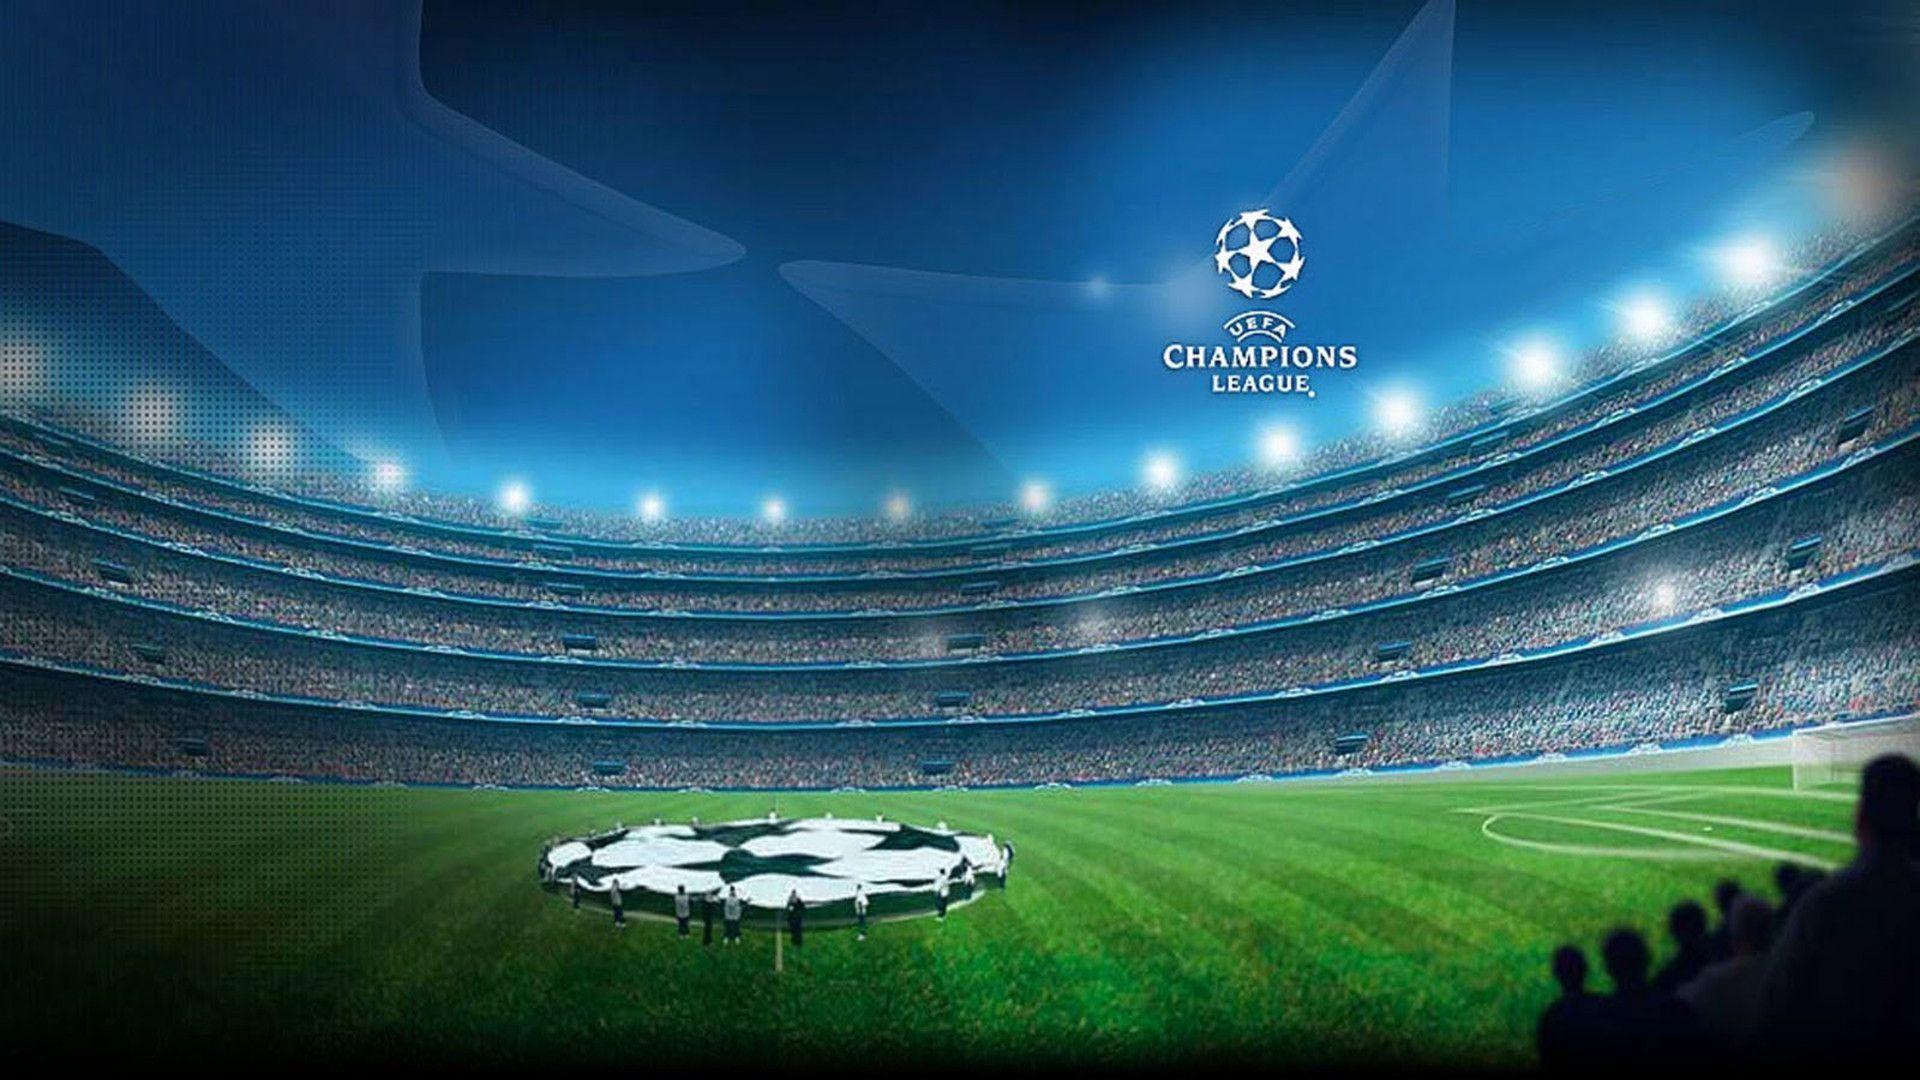 Uefa Champions League Stadium Wallpaper